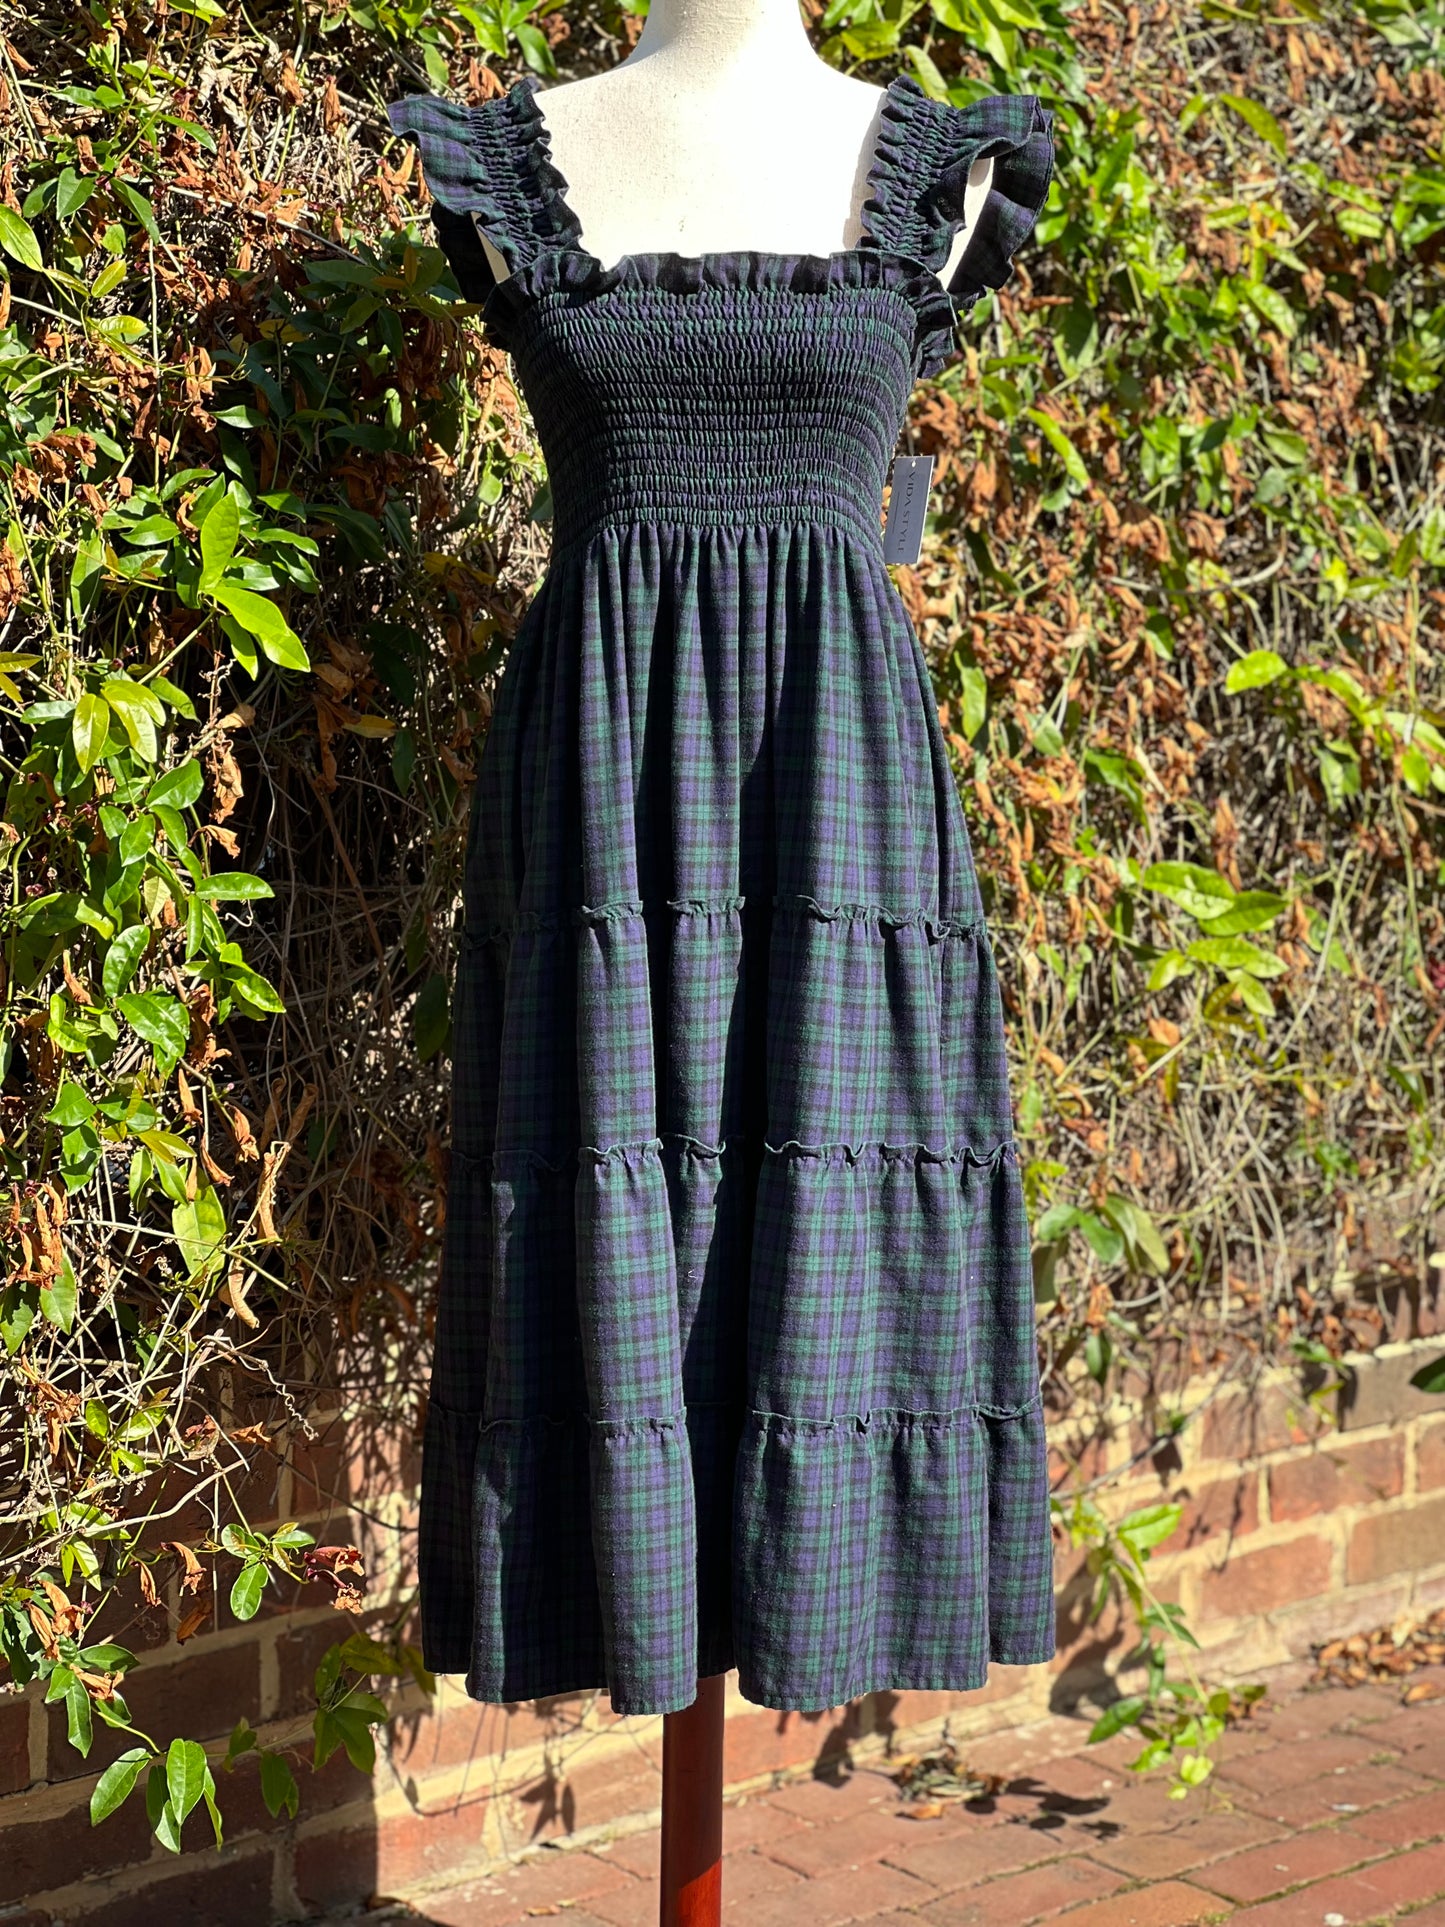 Hill House Ellie Nap Dress in "Navy Tartan" Size S